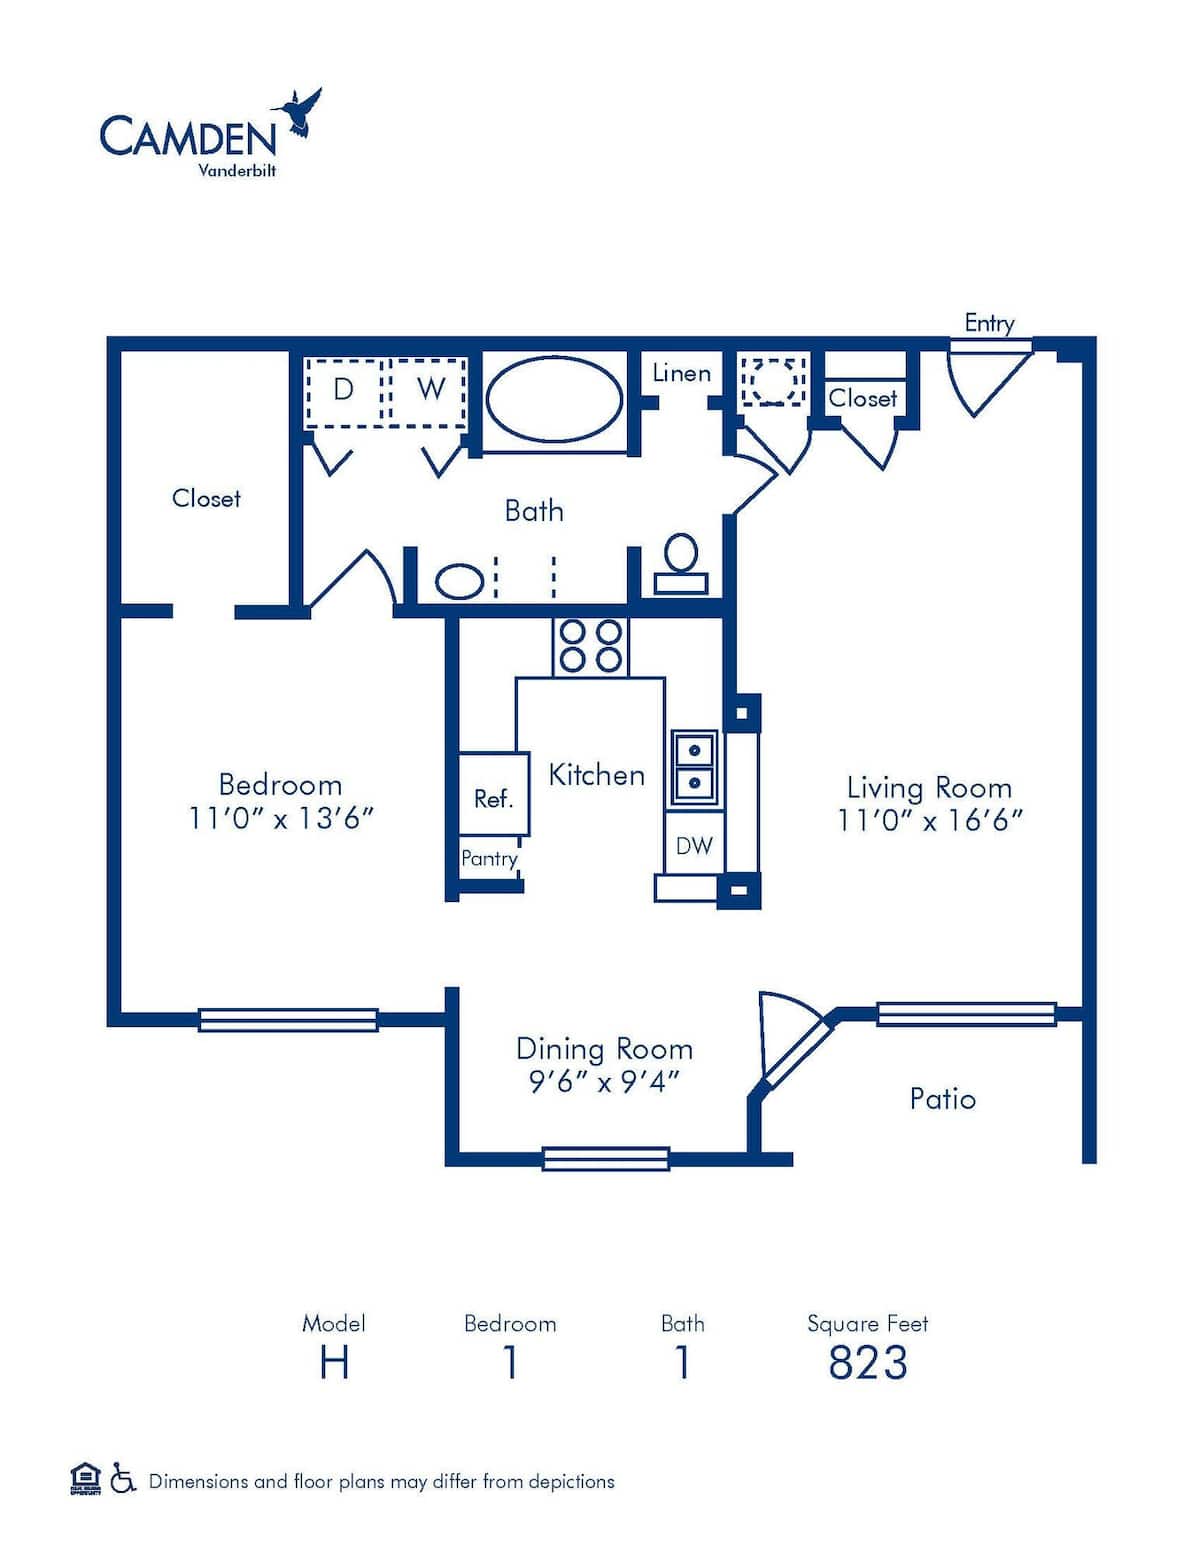 Floorplan diagram for H, showing 1 bedroom